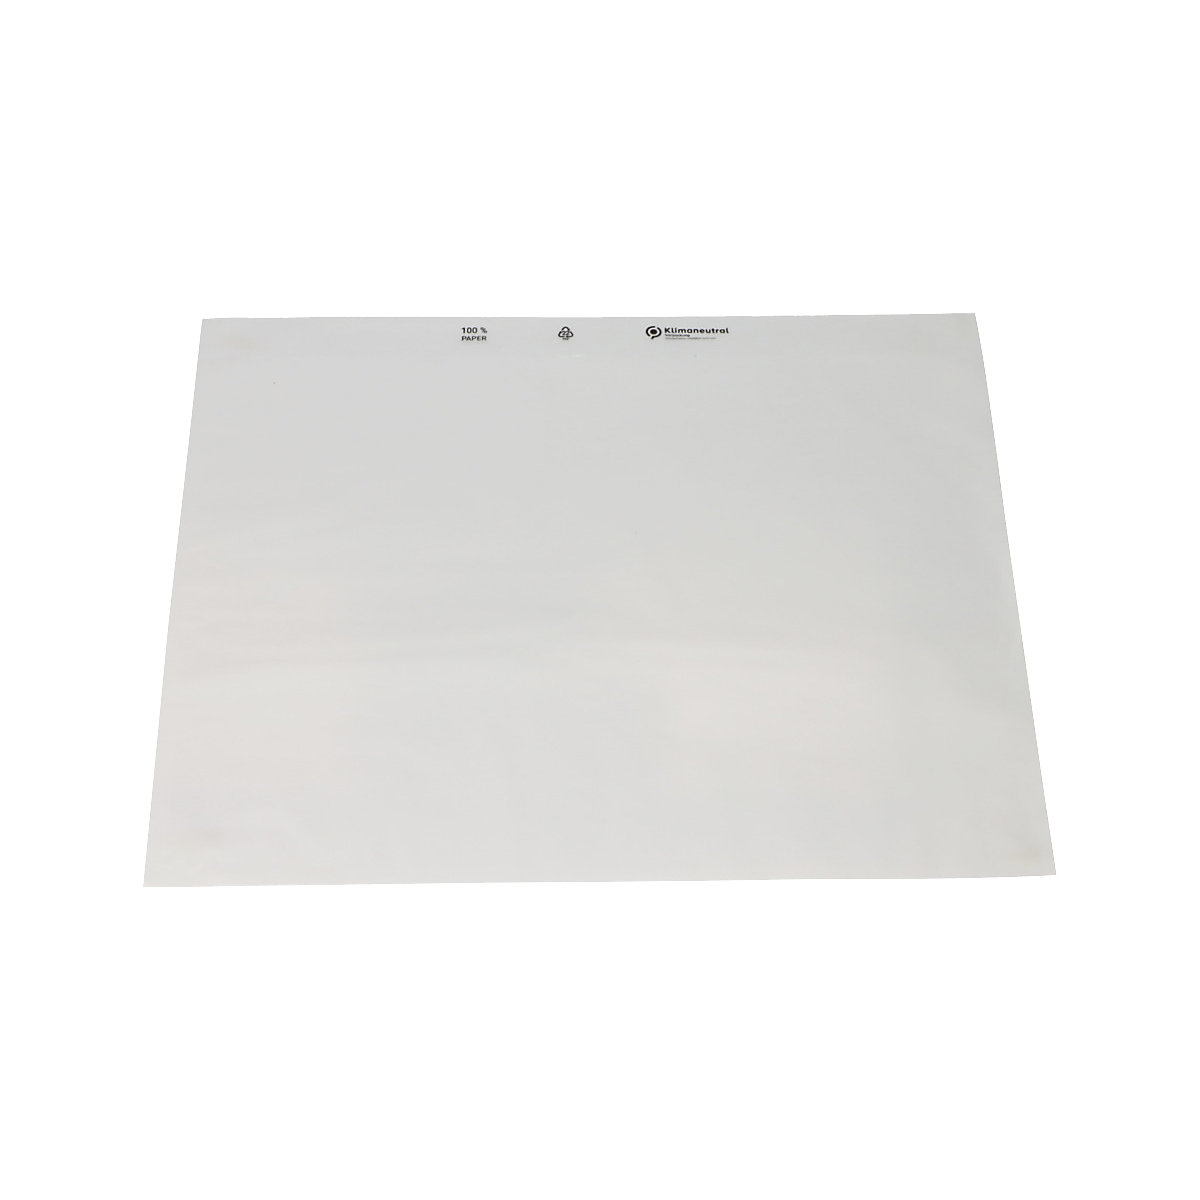 Dokumententaschen aus Papier terra, Transparent, VE 1000 Stk, LxB 330 x 262 mm, ab 10 VE-2